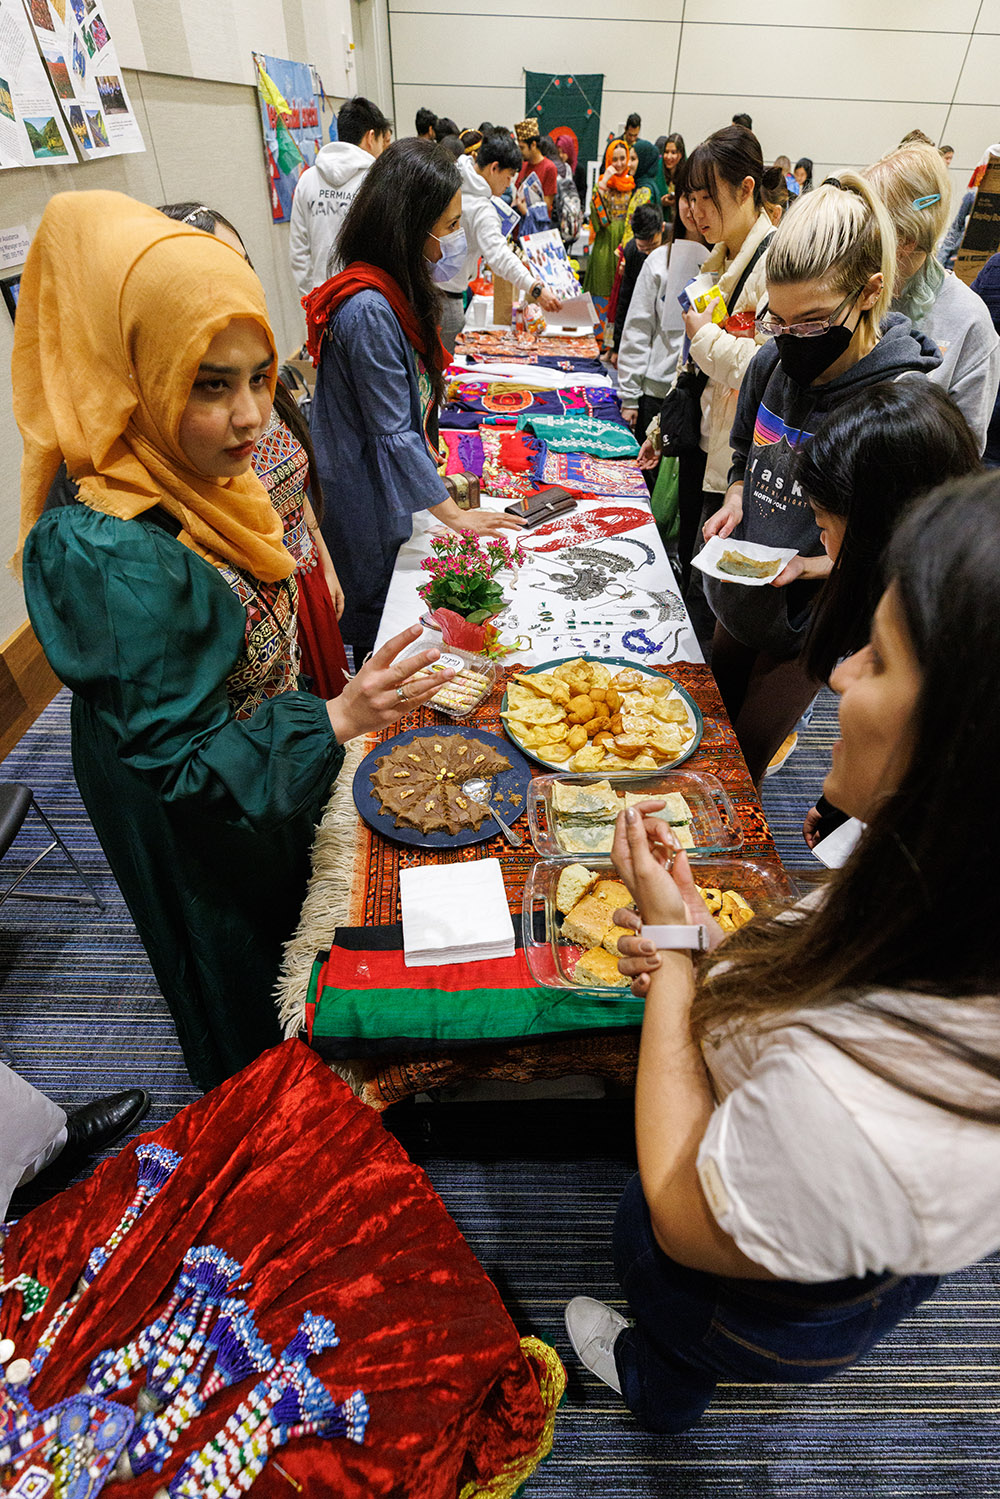 Participants serving food at International Jayhawk Festival 2022.